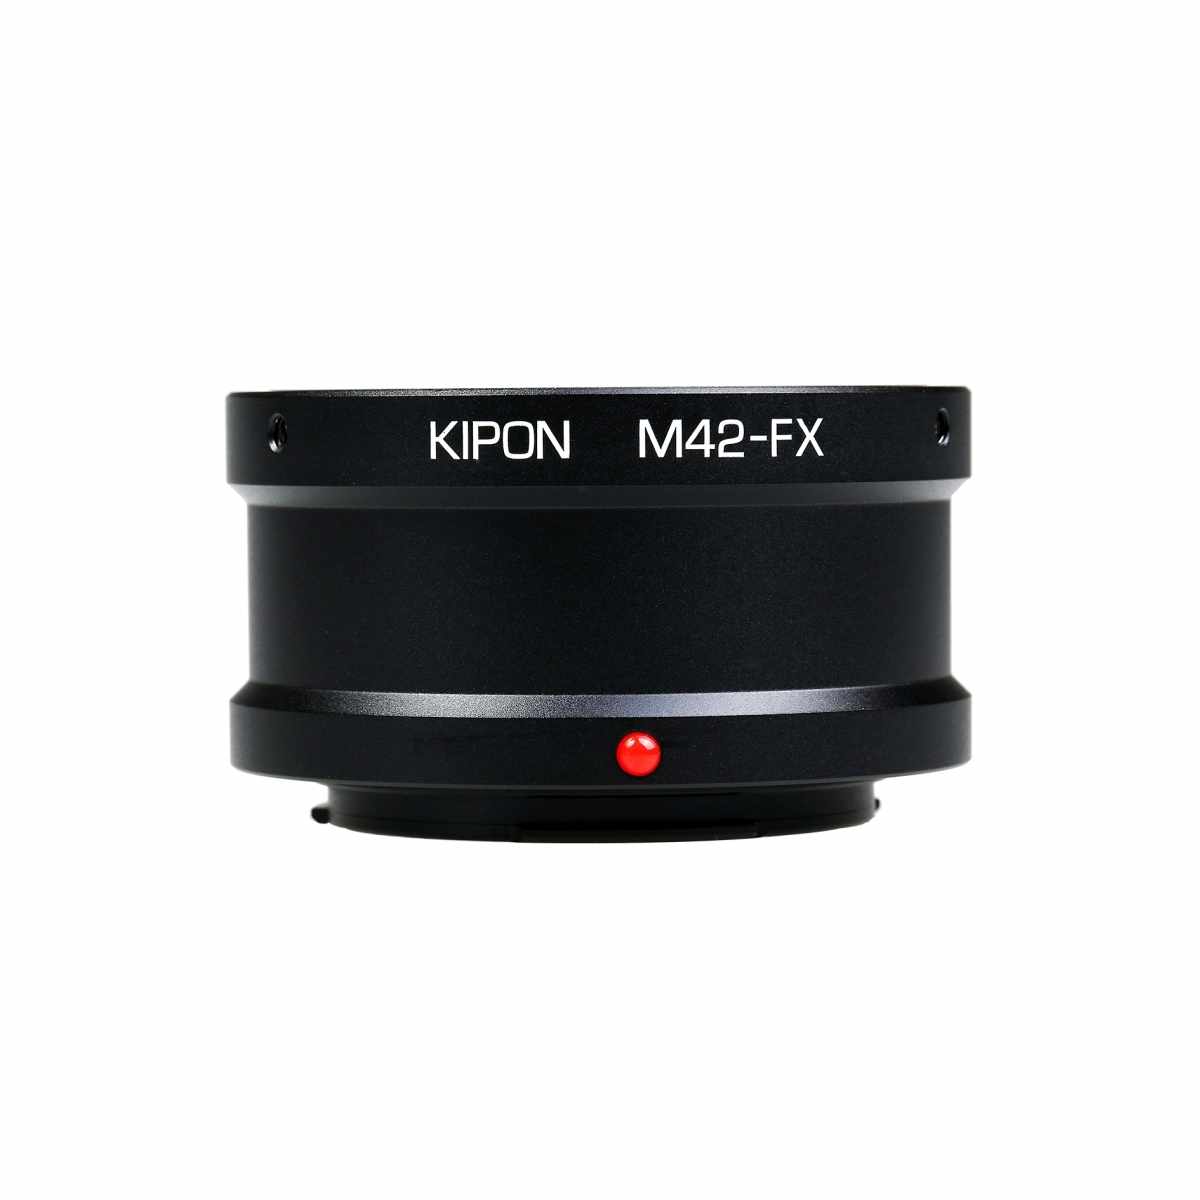 Kipon Adapter M42 to Fuji X